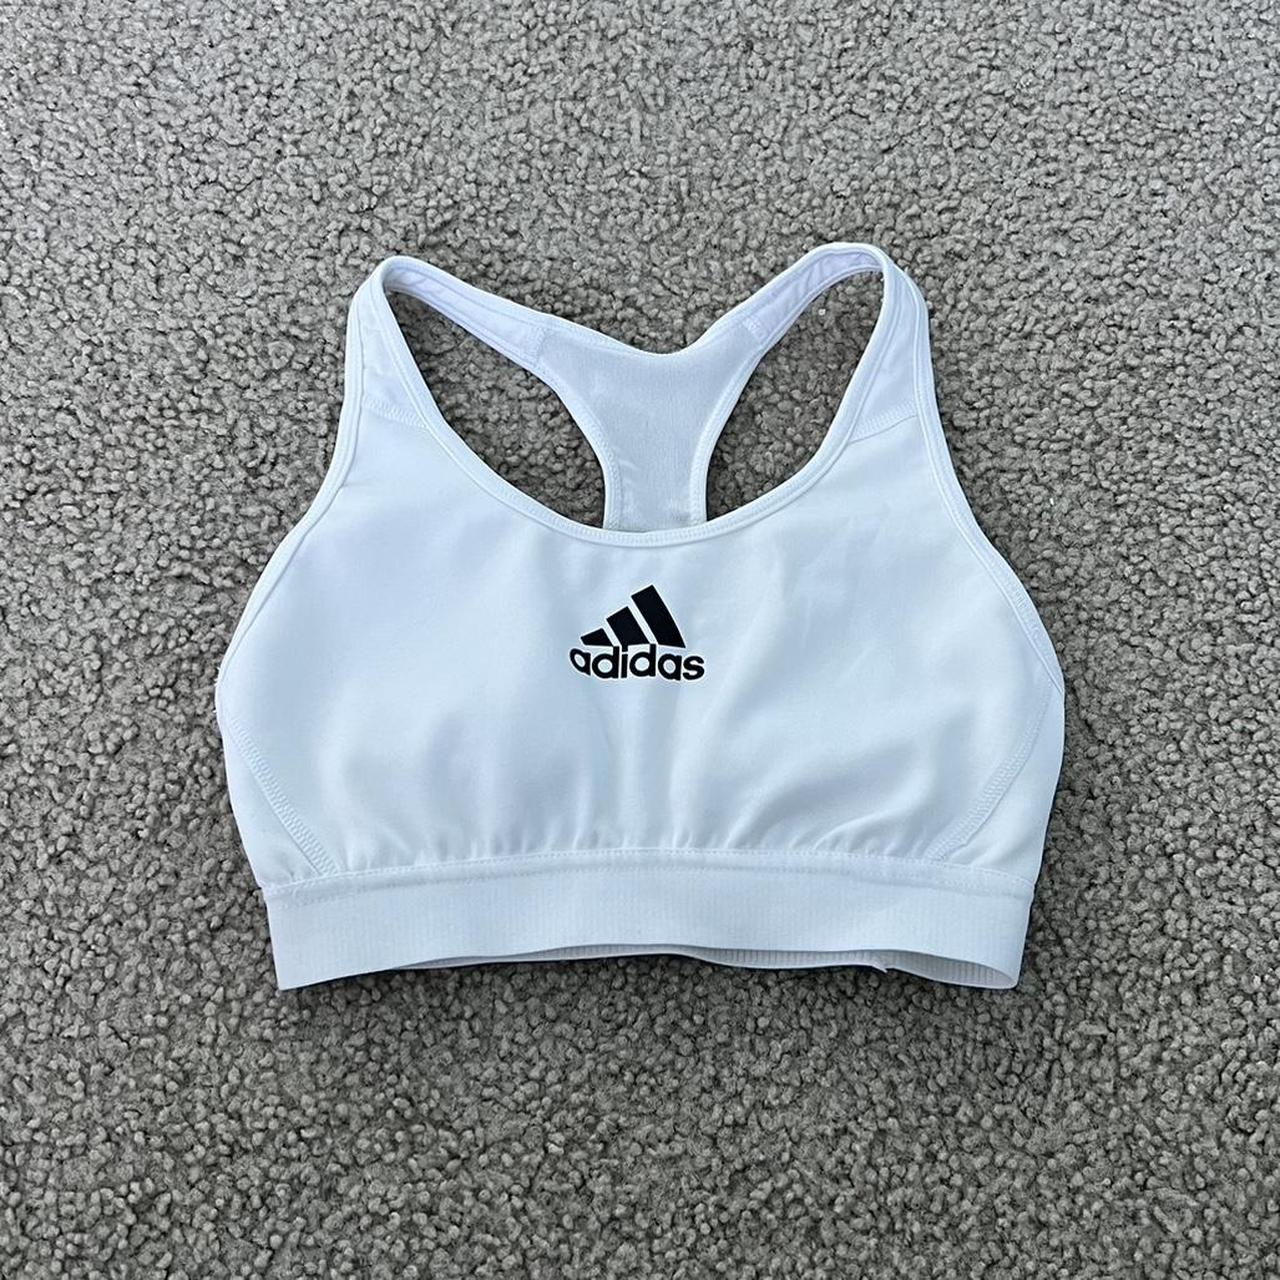 Adidas sports bra Size small #lululemon #adidas - Depop